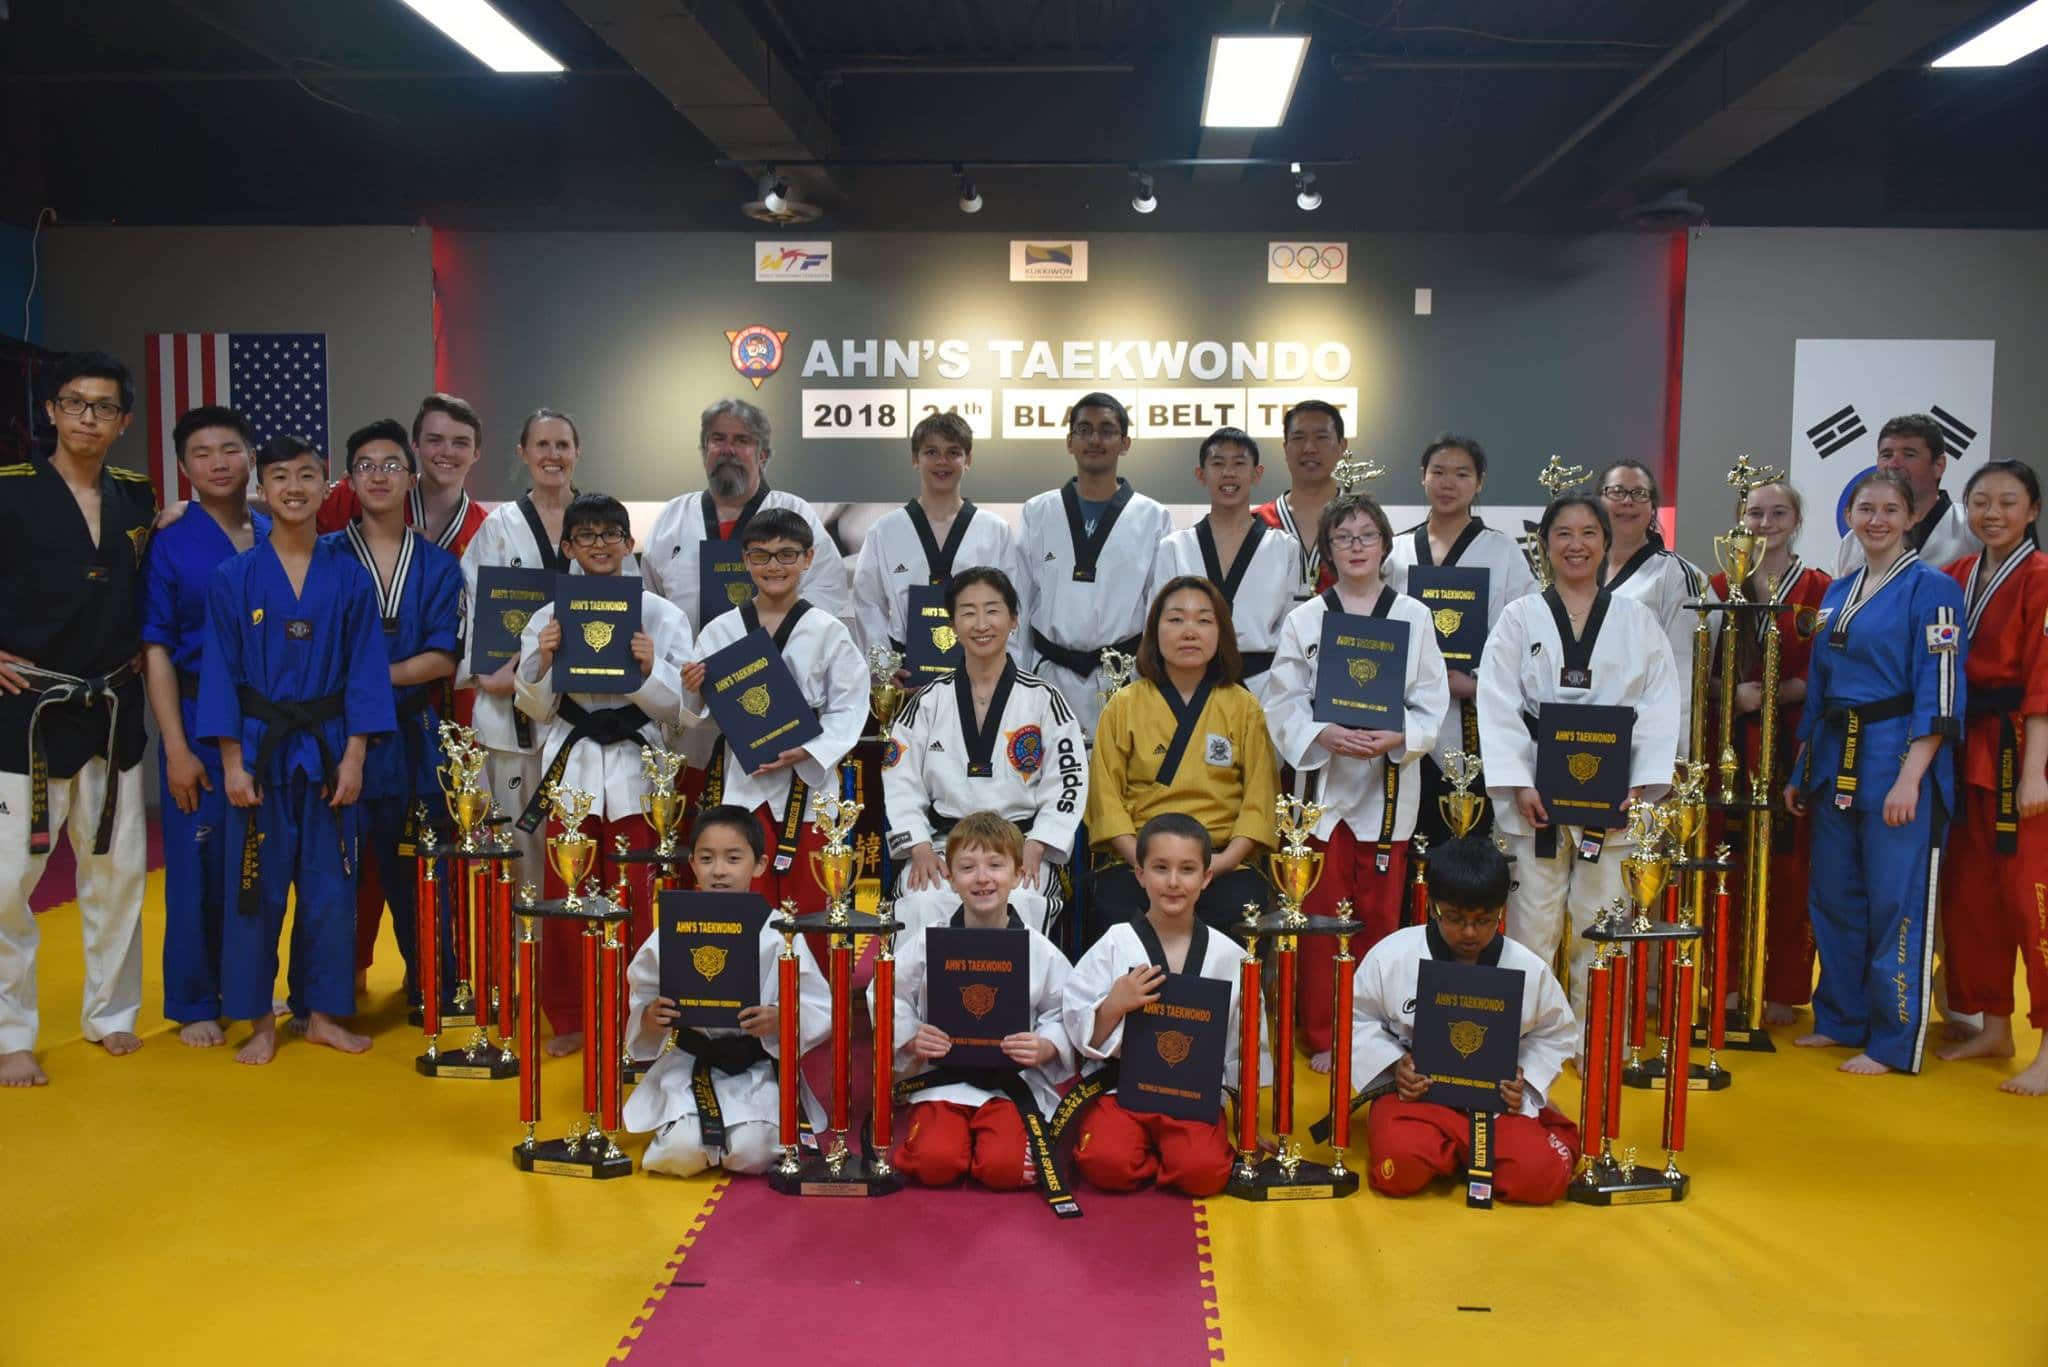 Ahn's Taekwondo Lawrenceville Master Anna YS Ahn